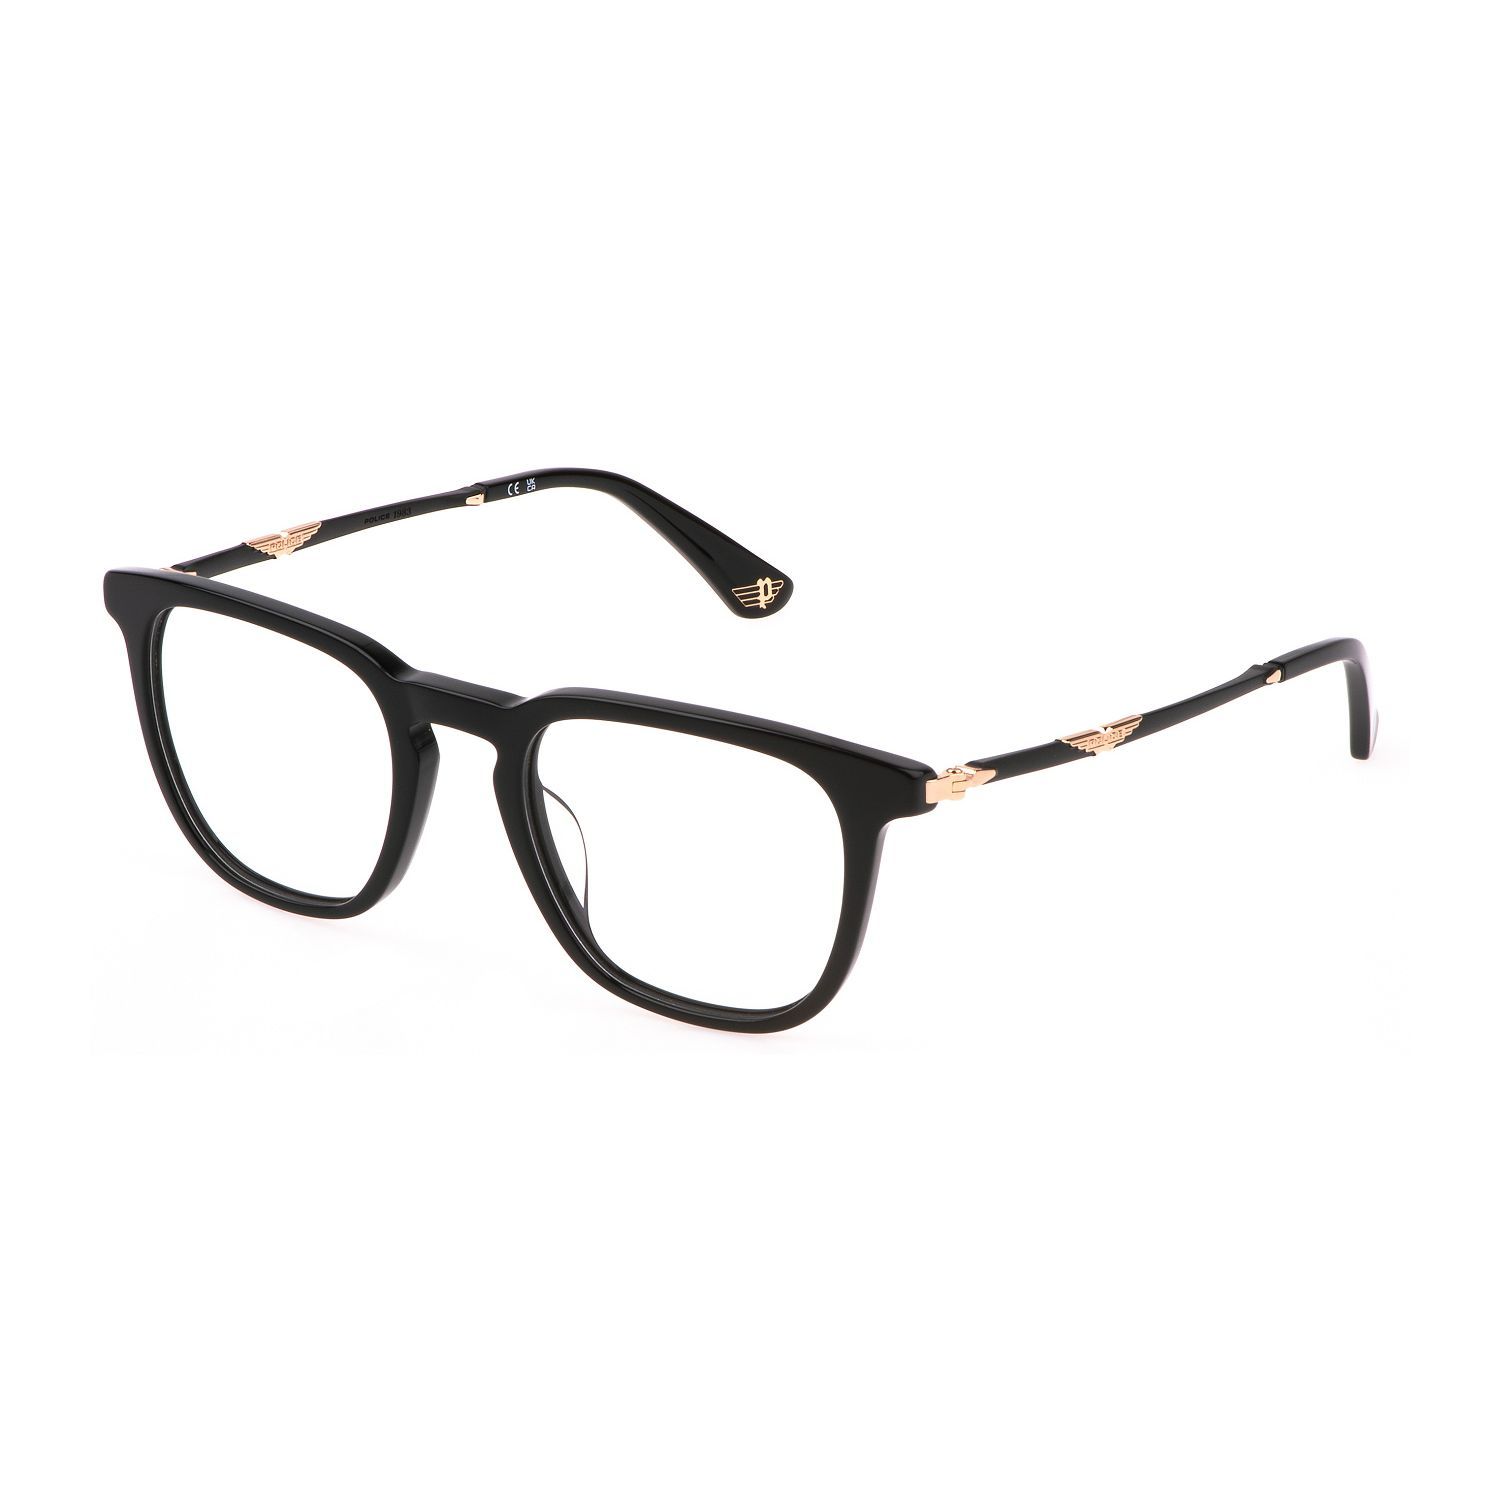 VPLL66M Square Eyeglasses 0700 - size 50